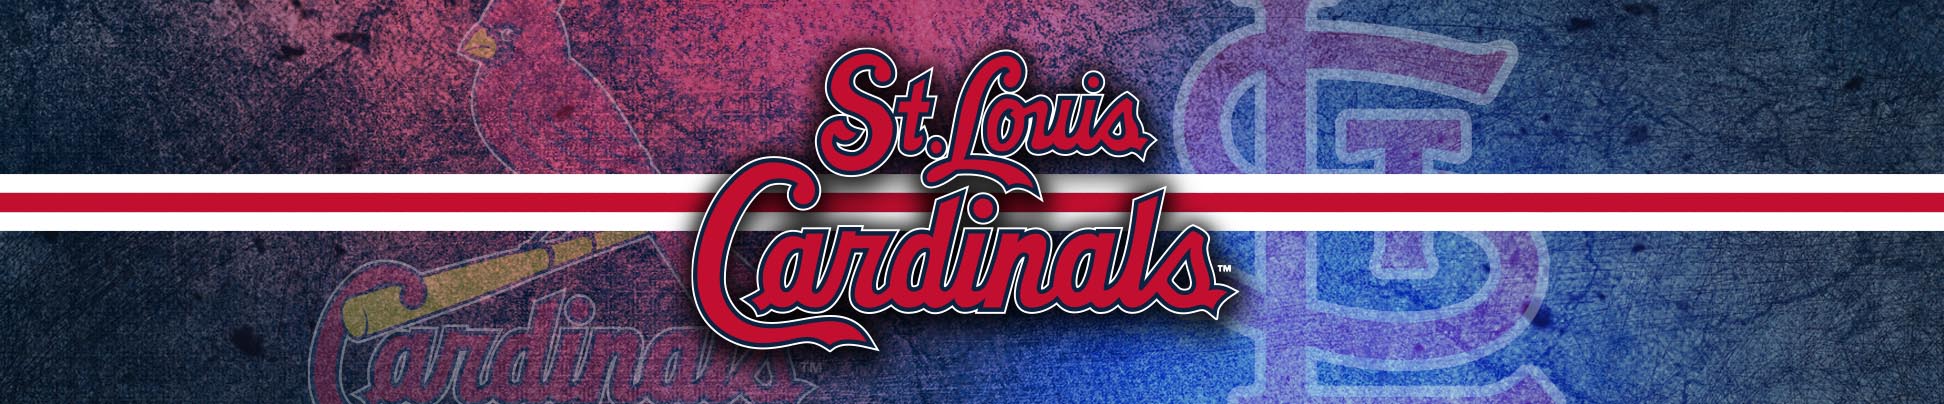 St. Louis Cardinals Memorabilia & Collectibles